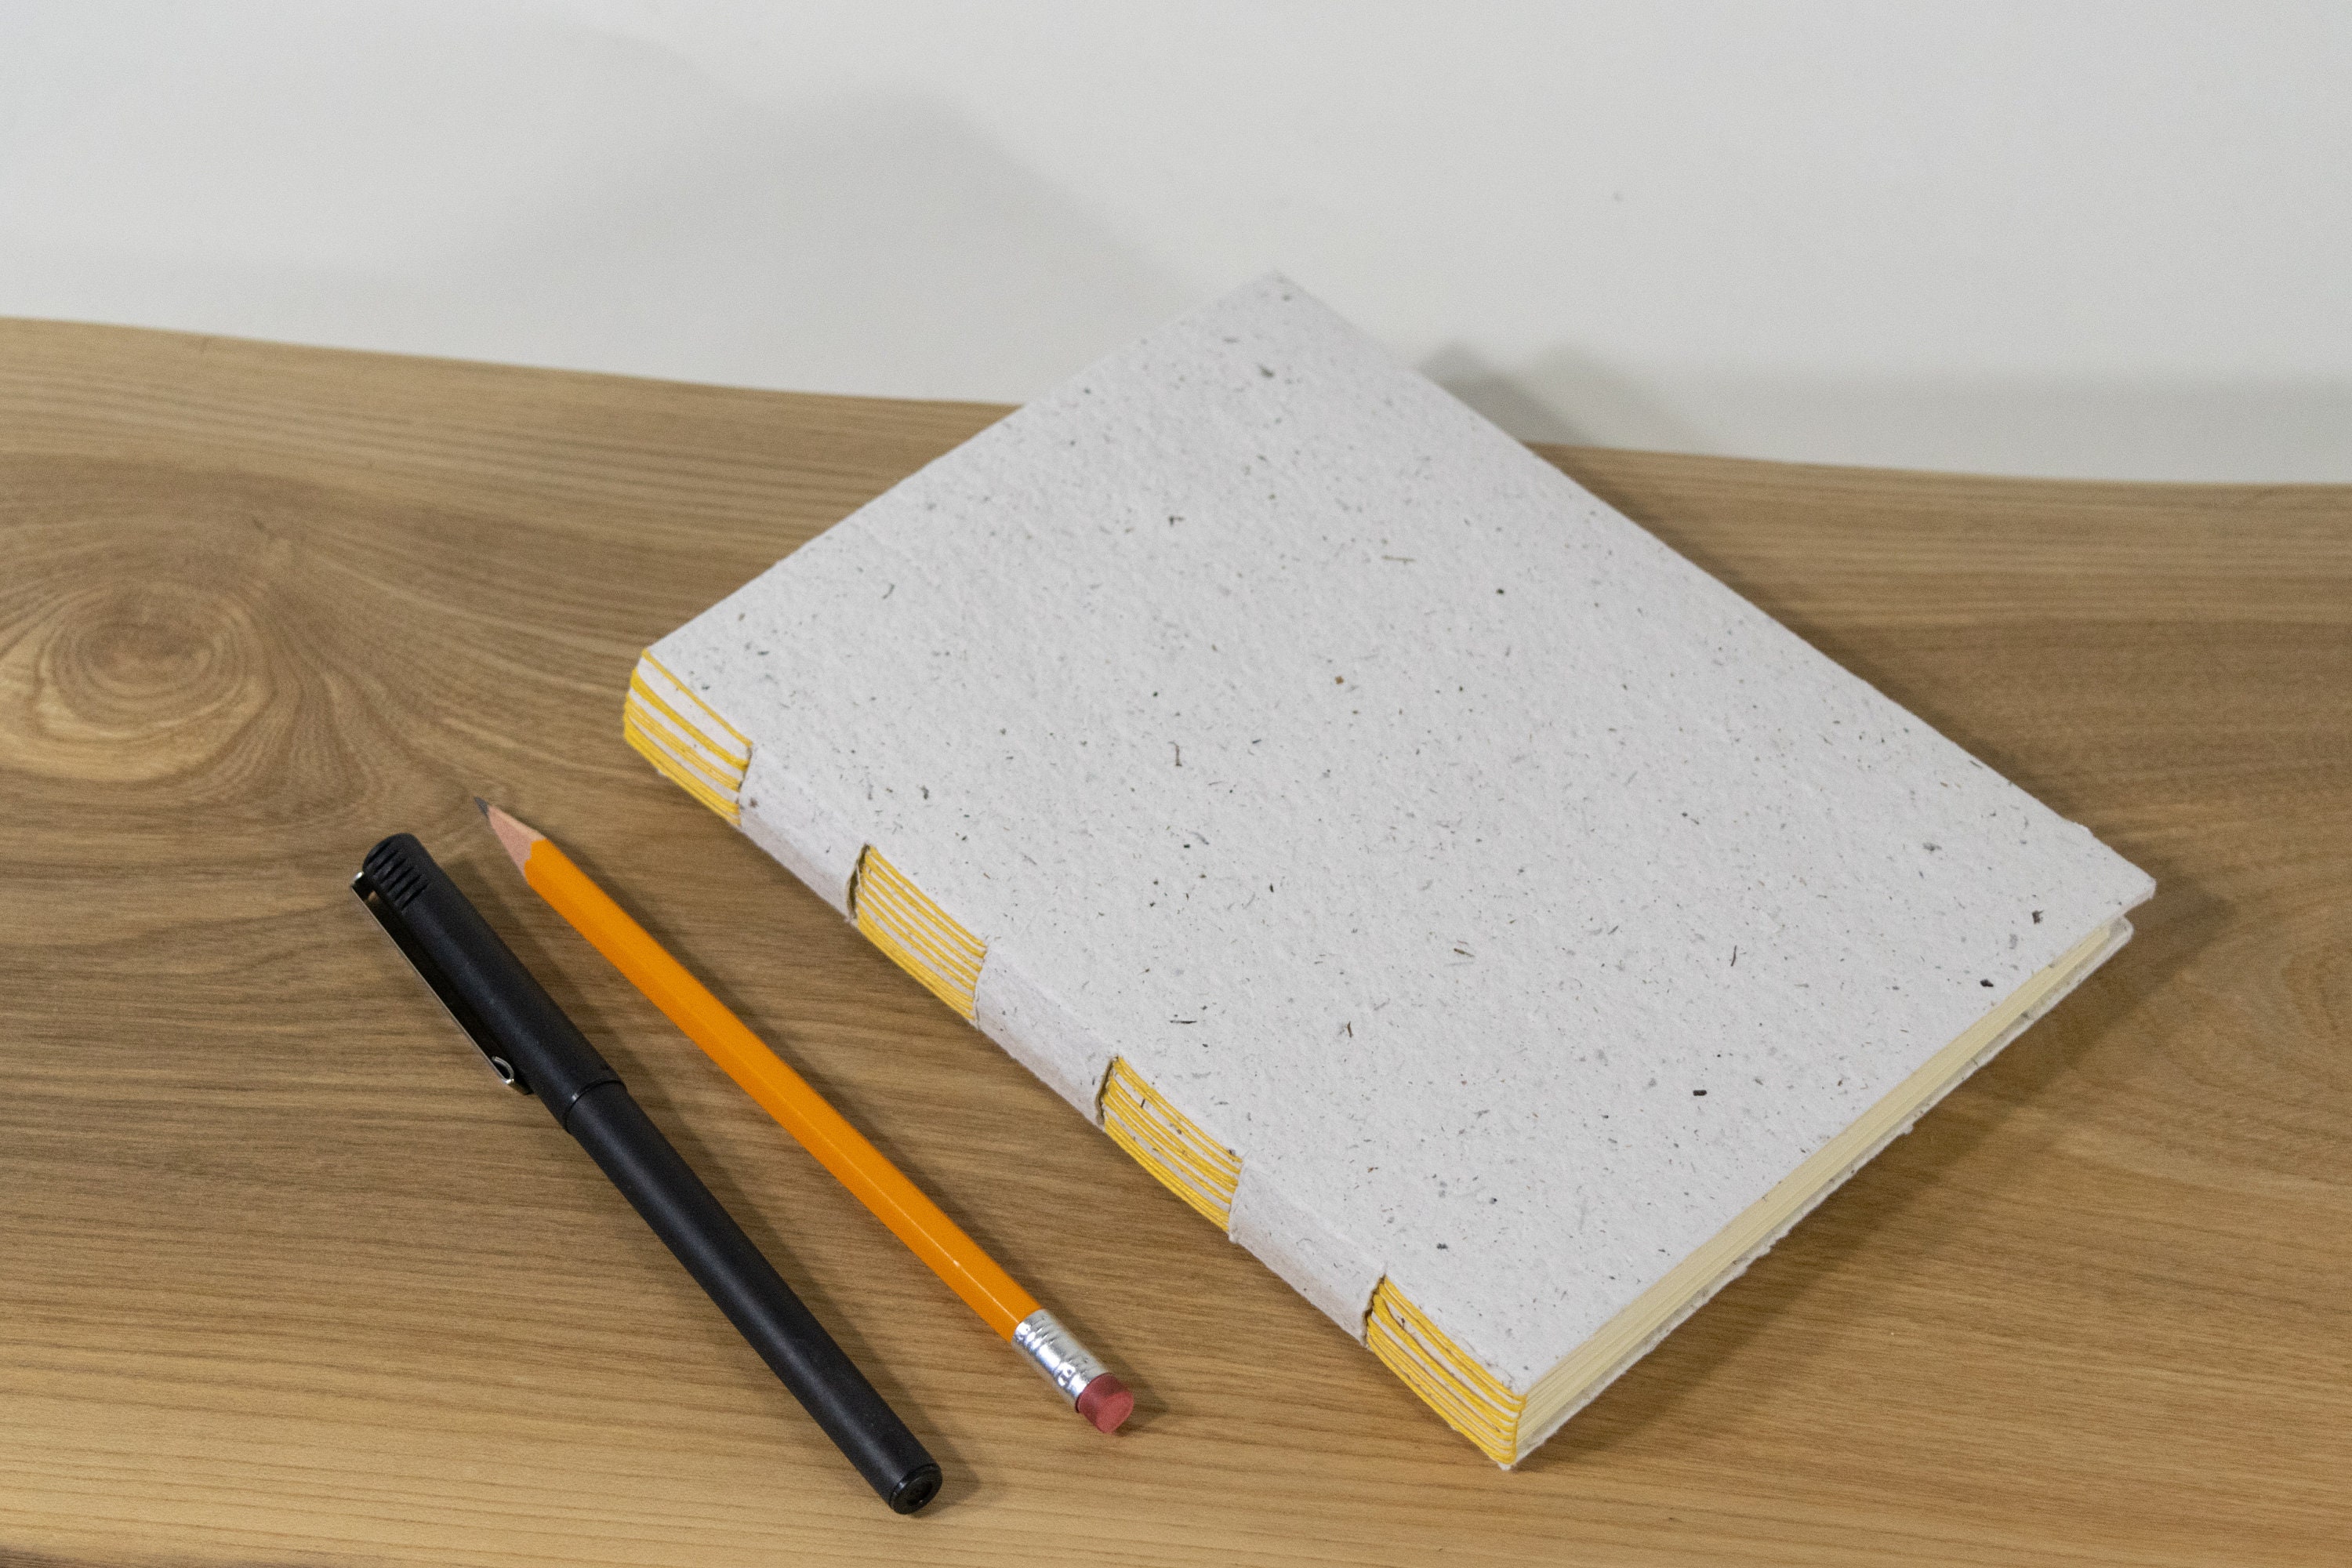 Large, Thick Hardback Notebook Sketchbook Journal Long Stitch Binding 